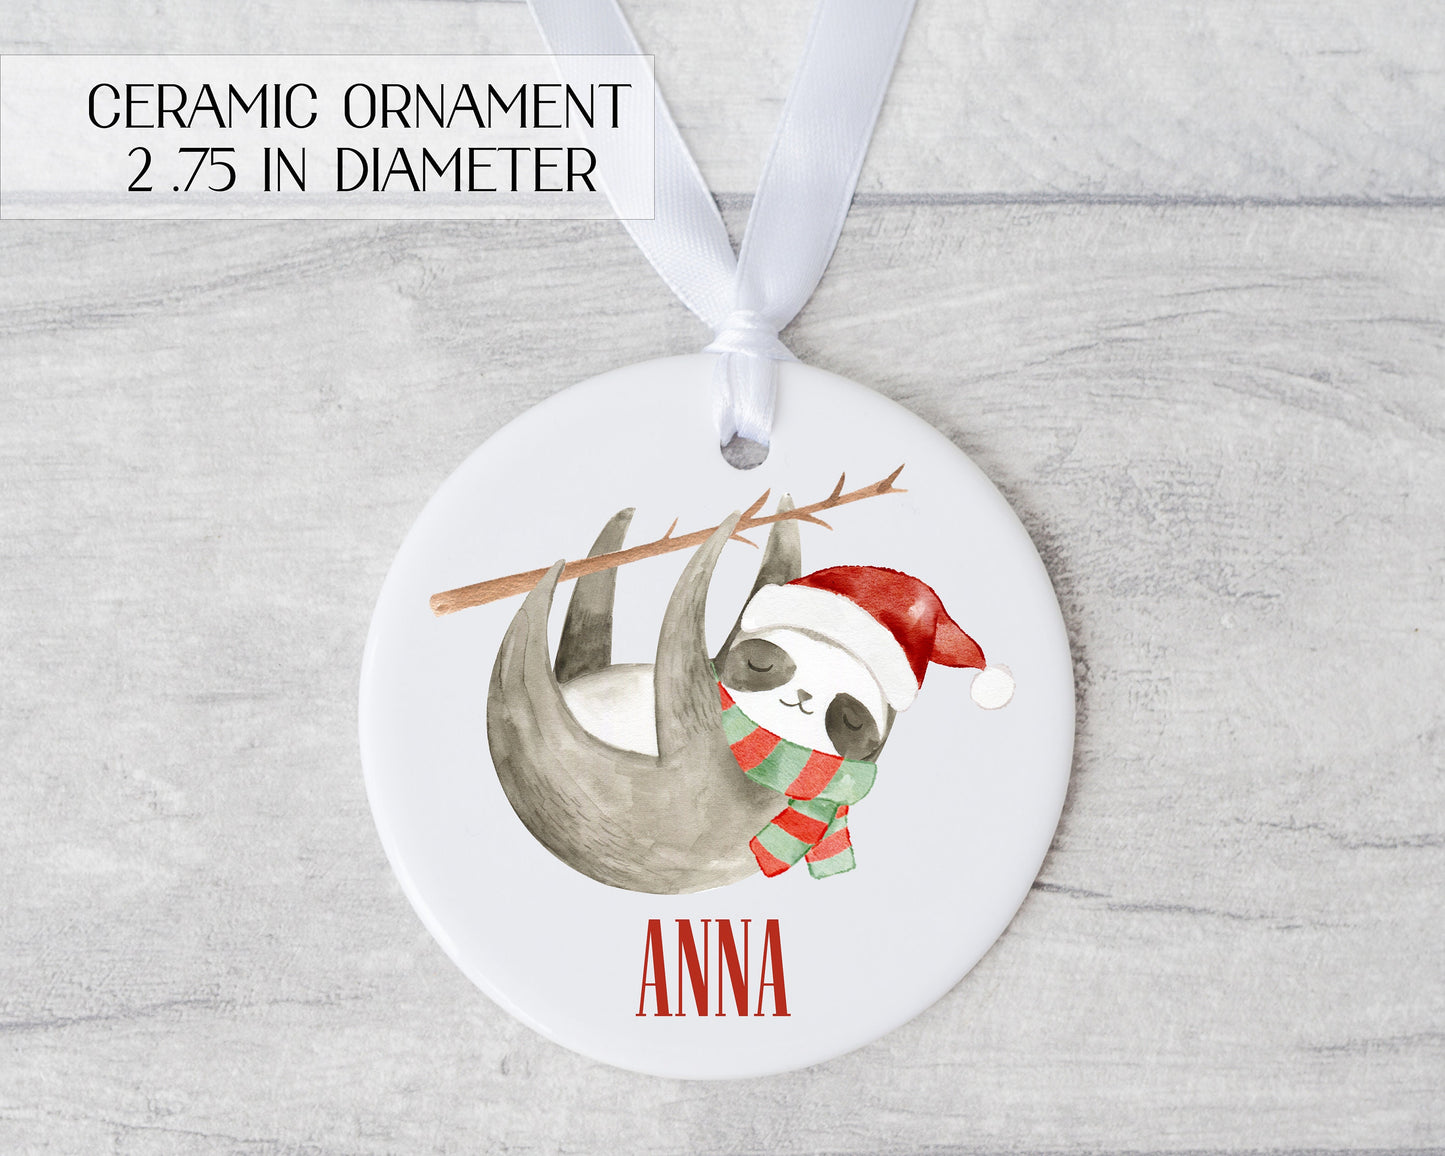 Sloth ornament - Personalized sloth ornament - Ceramic sloth ornament - Christmas sloth - sloth lovers gift